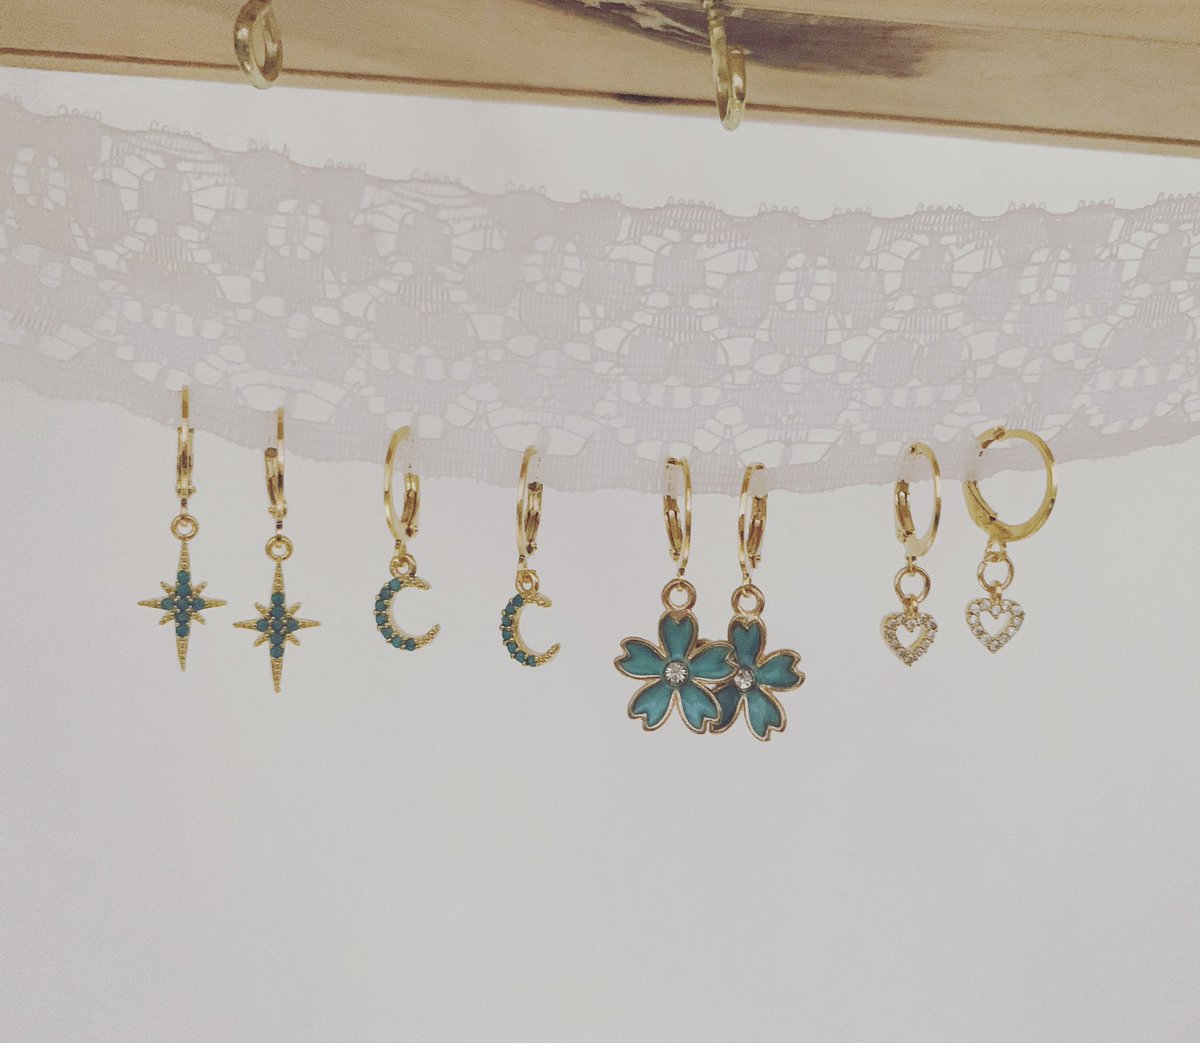 Growing gold hoop collection #jewellery #jewelry #goldhoops #northstarjewelry #cubiczirconiajewelry #cubiczirconiaearrings #cubiczirconiahearts #moonhoops #turquoisejewelry #turquoisemoon #turquoisestar #flowerhoop #enamelflowers